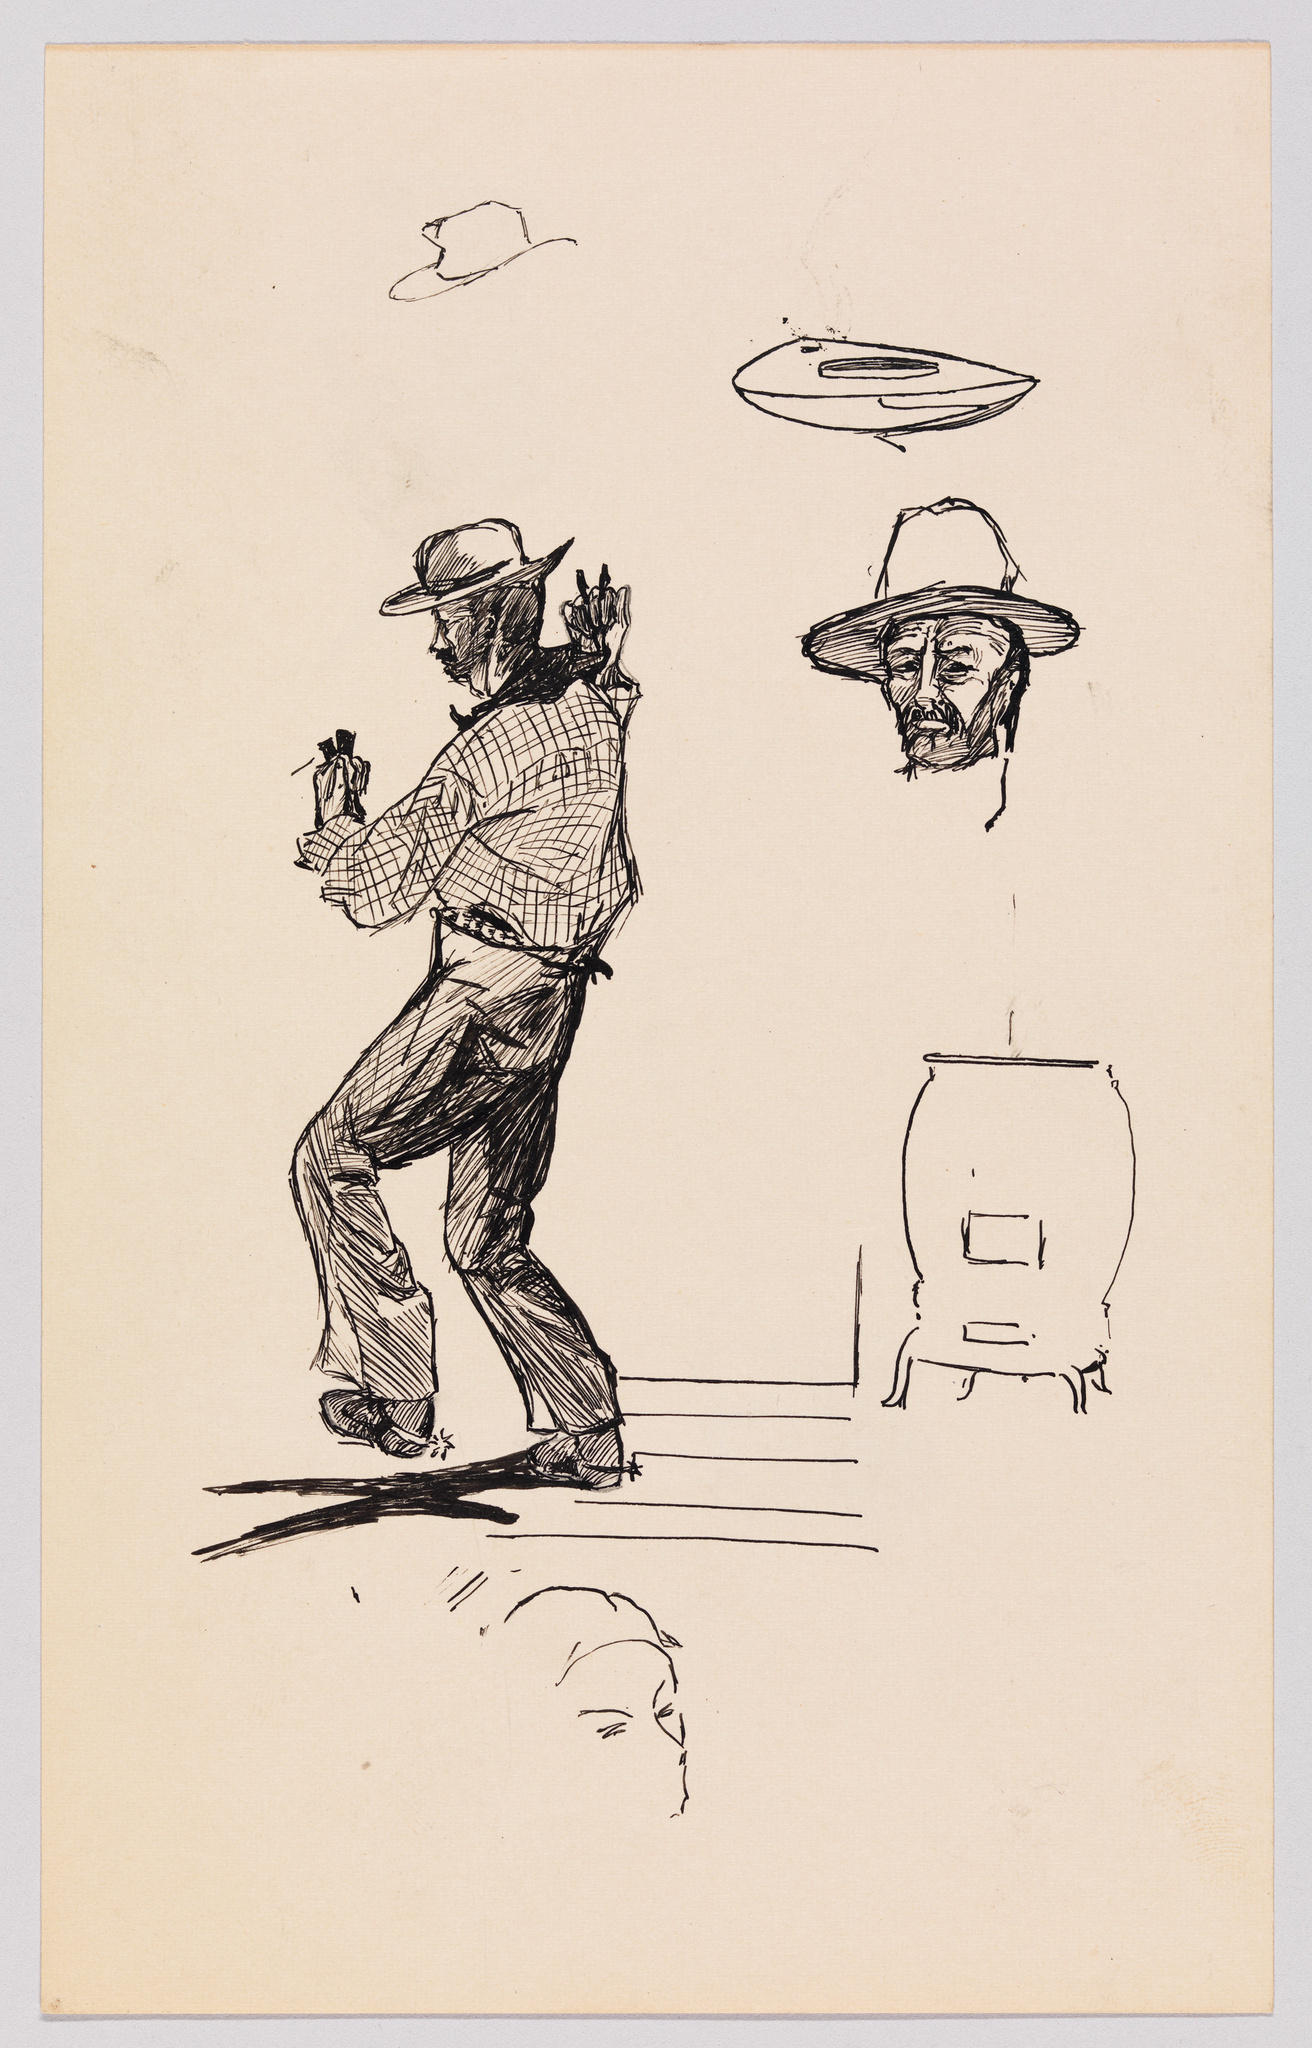 25 Easy Cowboy Drawing Ideas - How to Draw a Cowboy